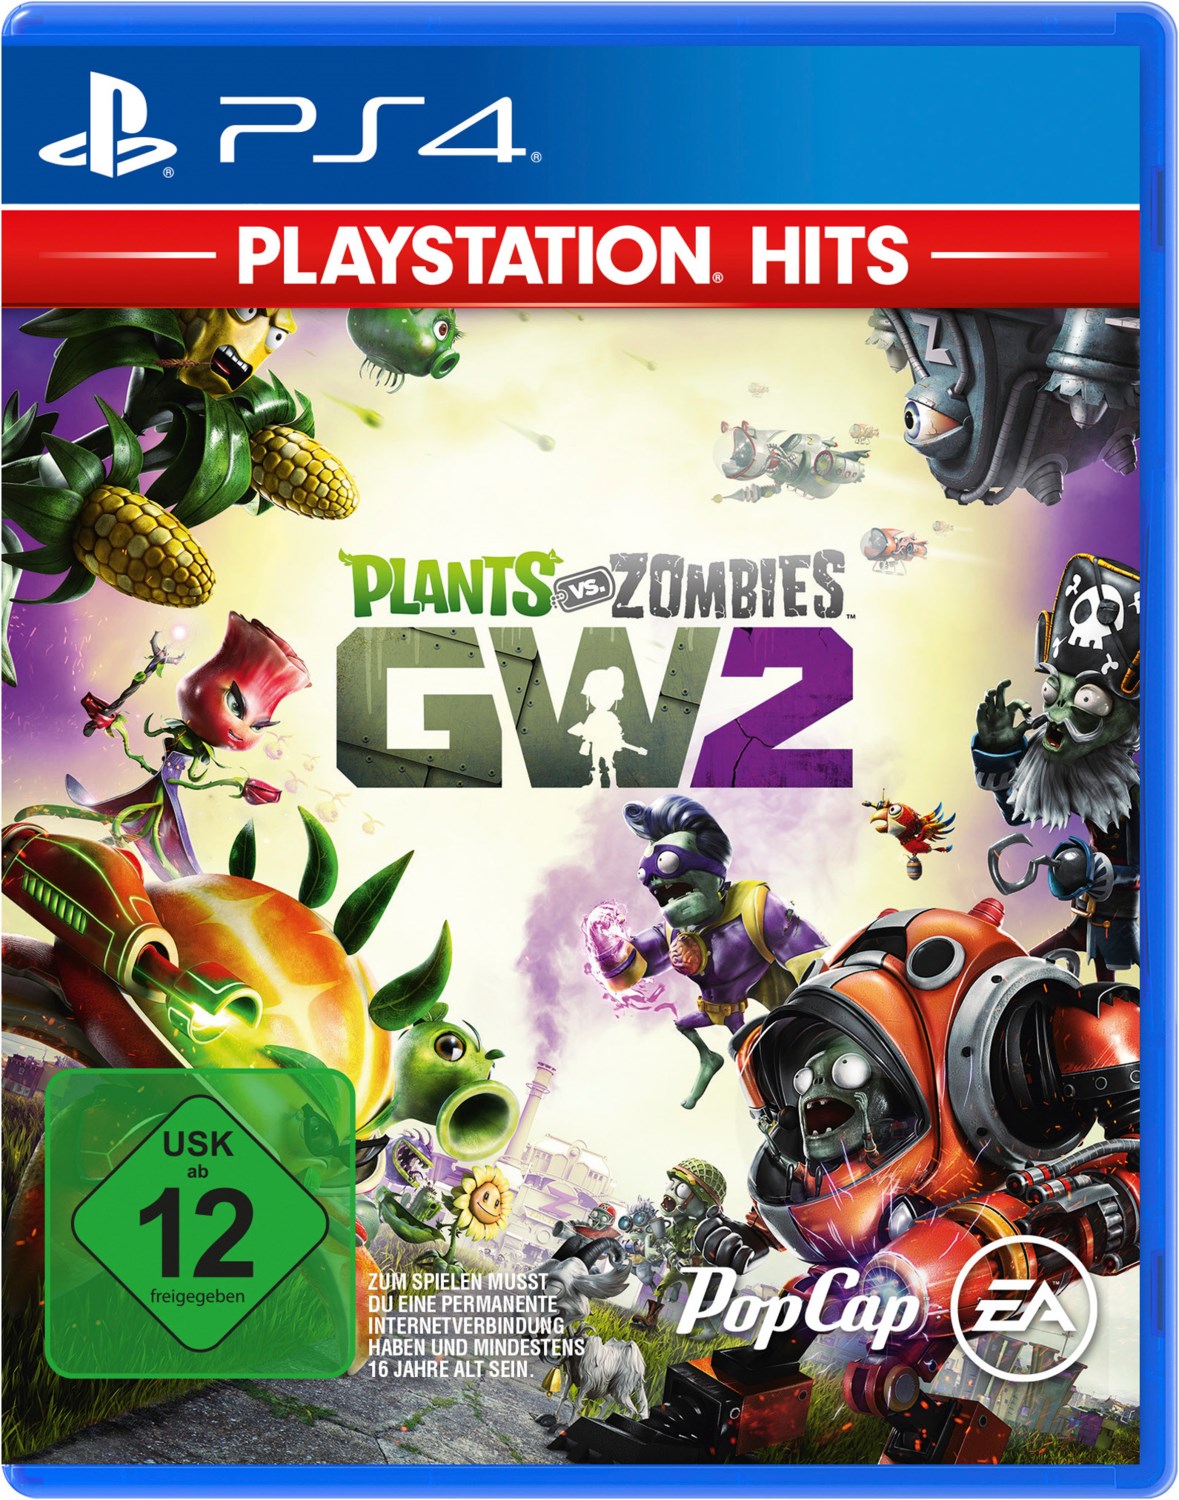 Software Pyramide PS4 PS Hits: Plants vs. Zombies Garden Warfare 2